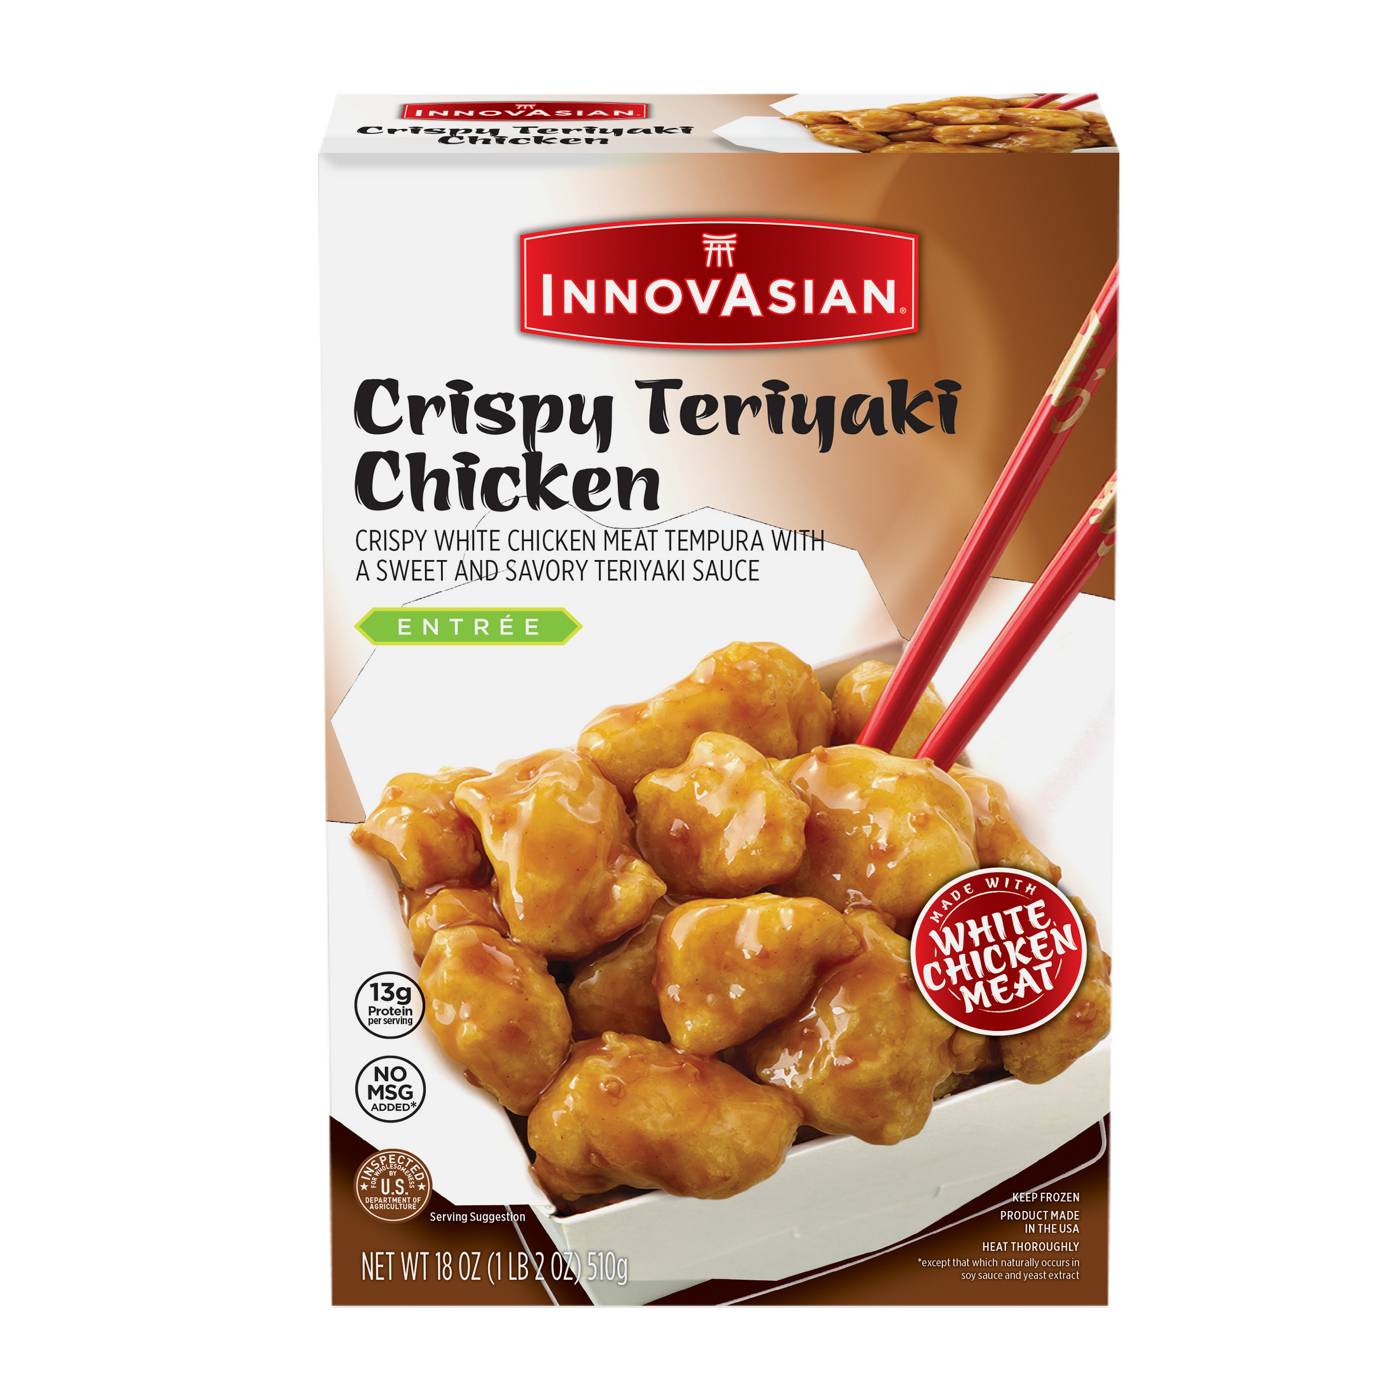 InnovAsian Frozen Crispy Teriyaki Chicken; image 1 of 7